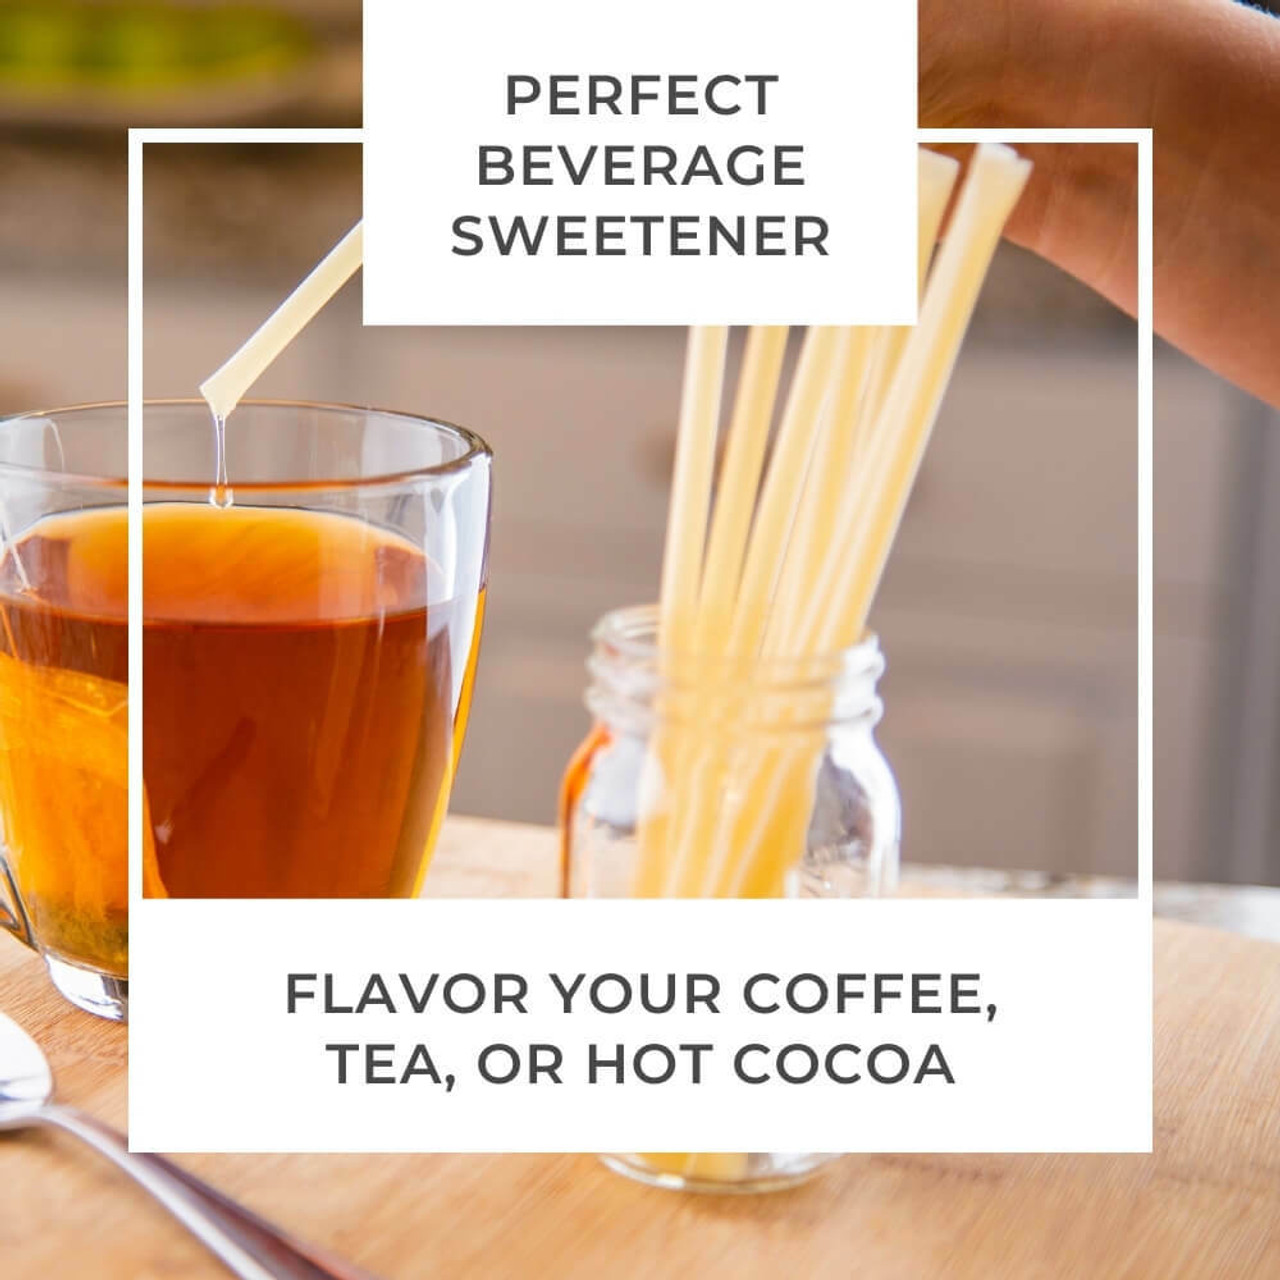 Lemon honey straws for flavoring your drink